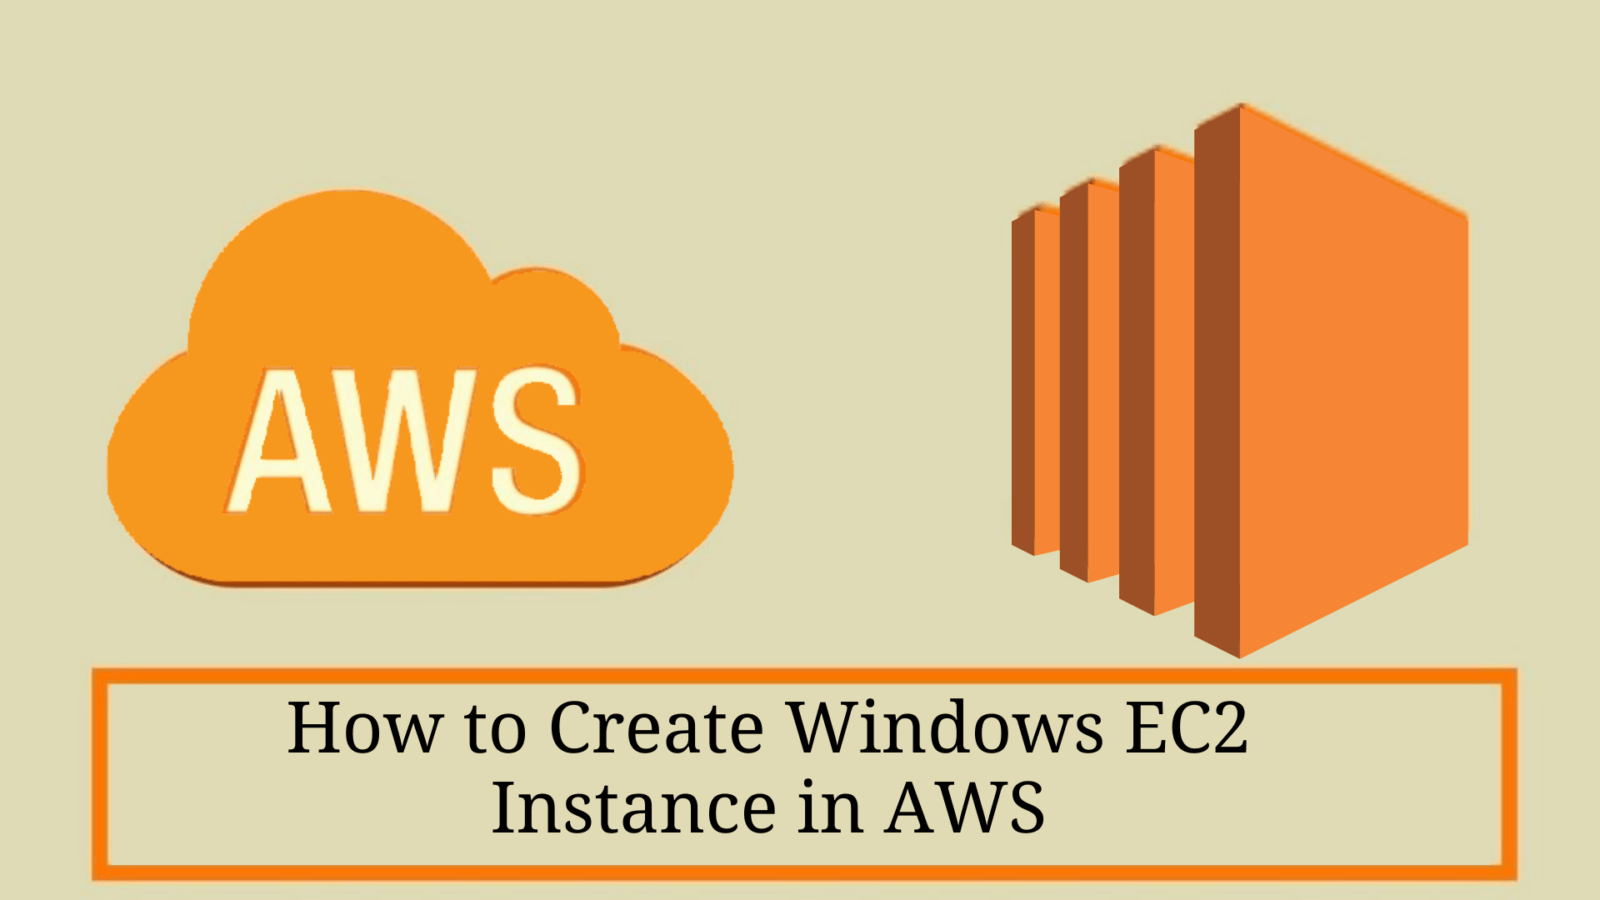 Create a Windows EC2 instance in AWS